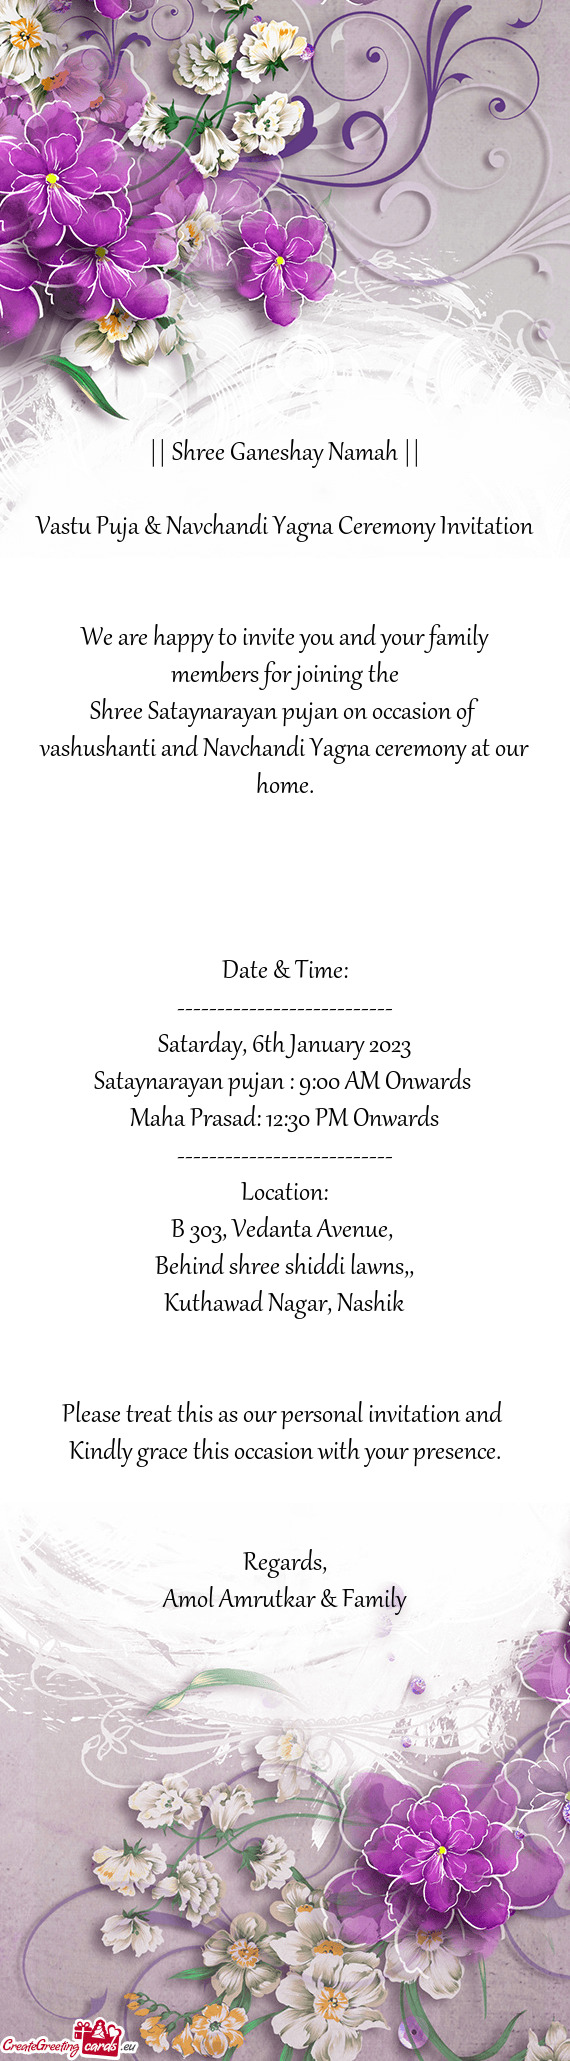 Shree Sataynarayan pujan on occasion of vashushanti and Navchandi Yagna ceremony at our home